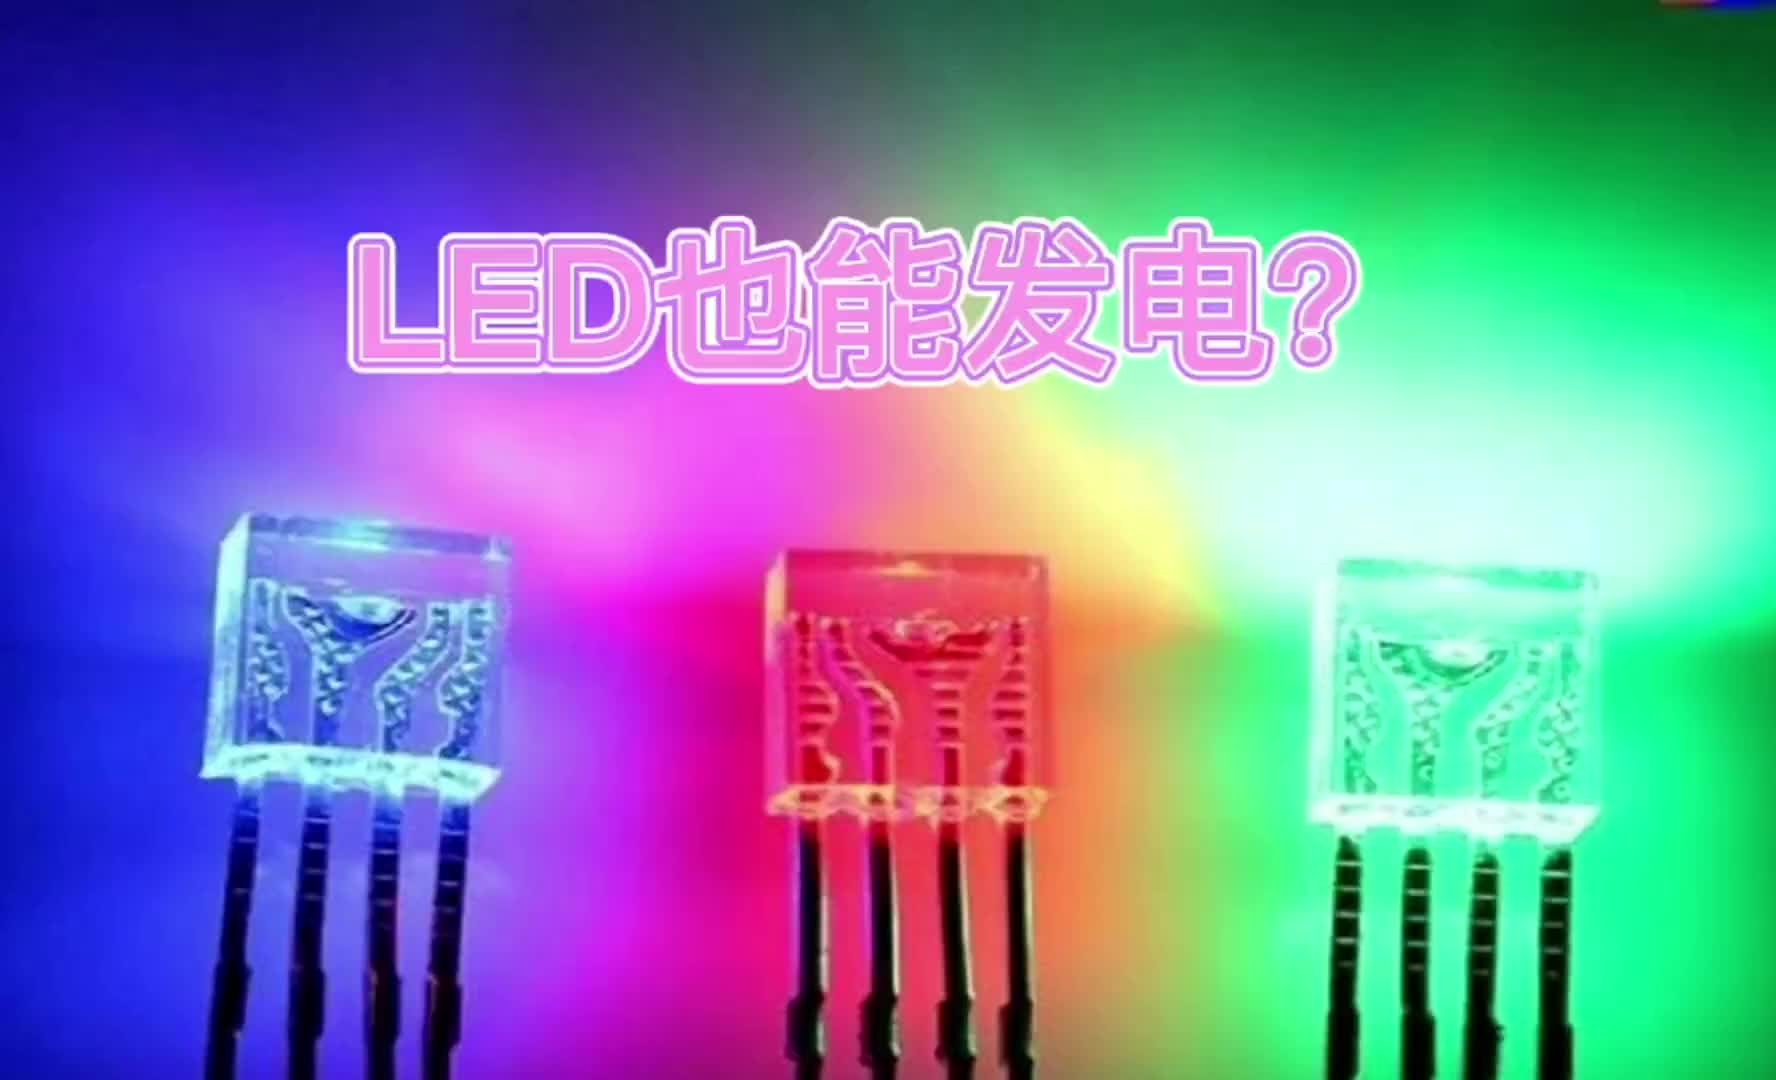 00020 LED也能发电？ #LED发电 #LED #发电 #光伏 #DIY #测评 #电子工程师 